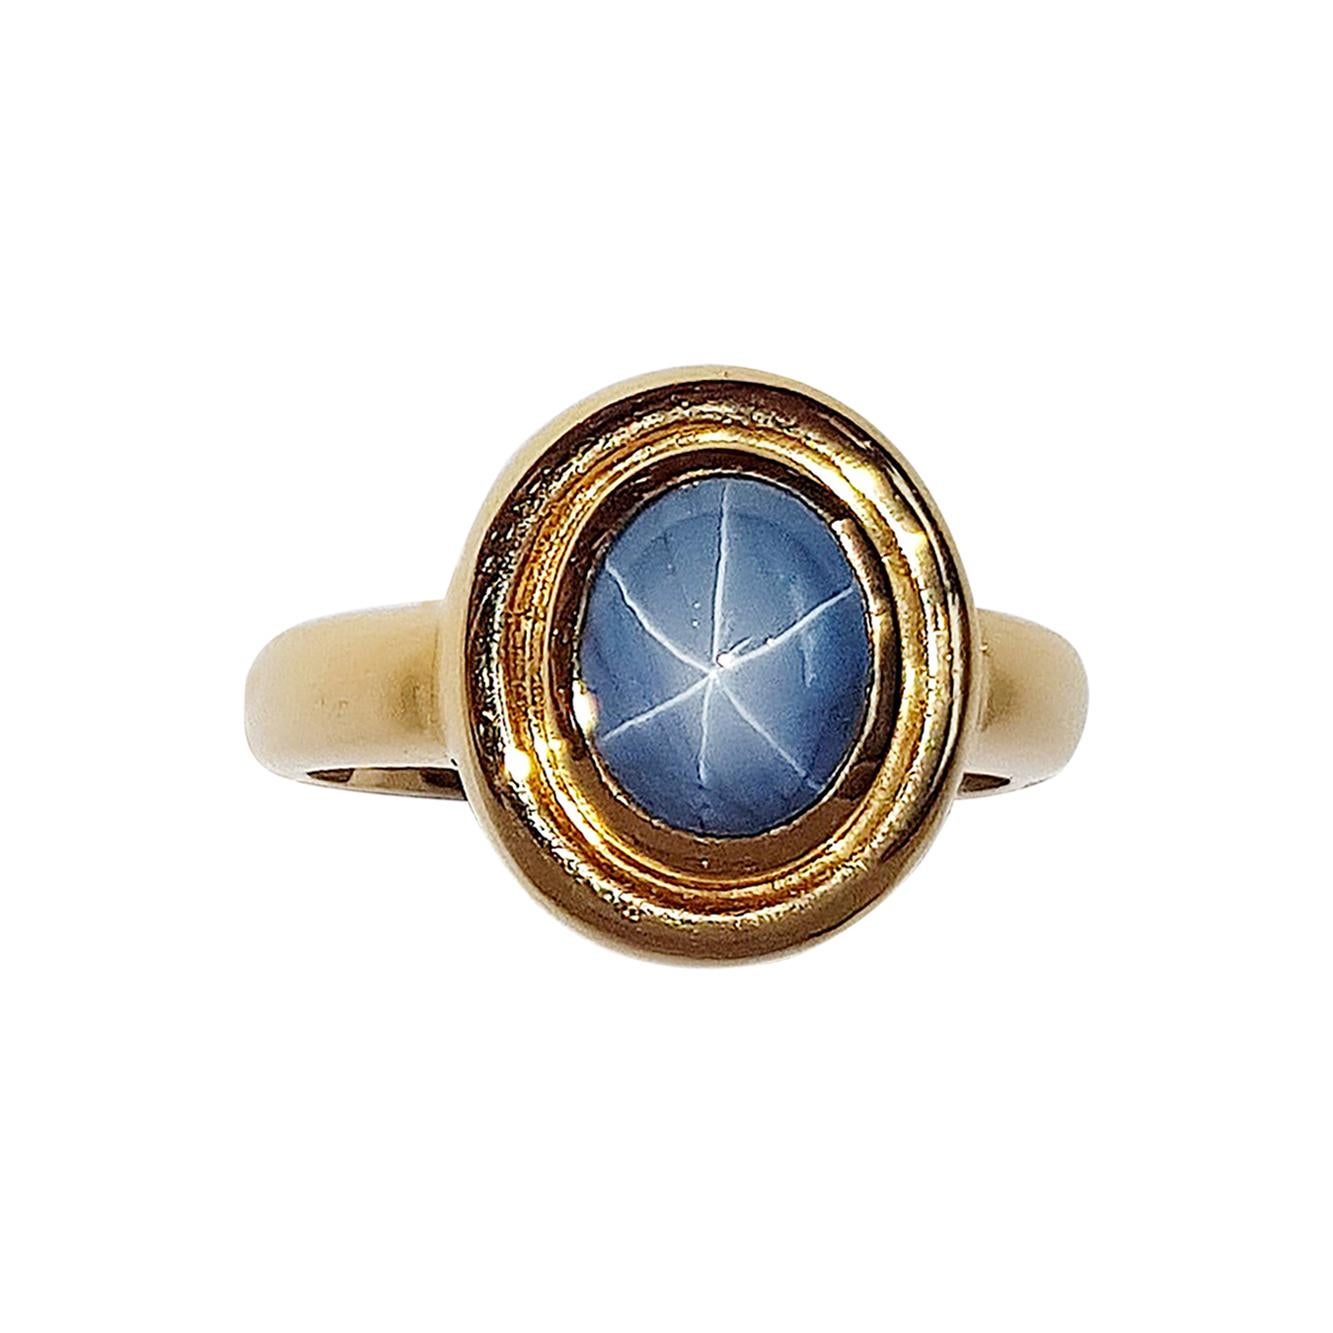 Blue Star Sapphire Ring Set in 18 Karat Gold Settings